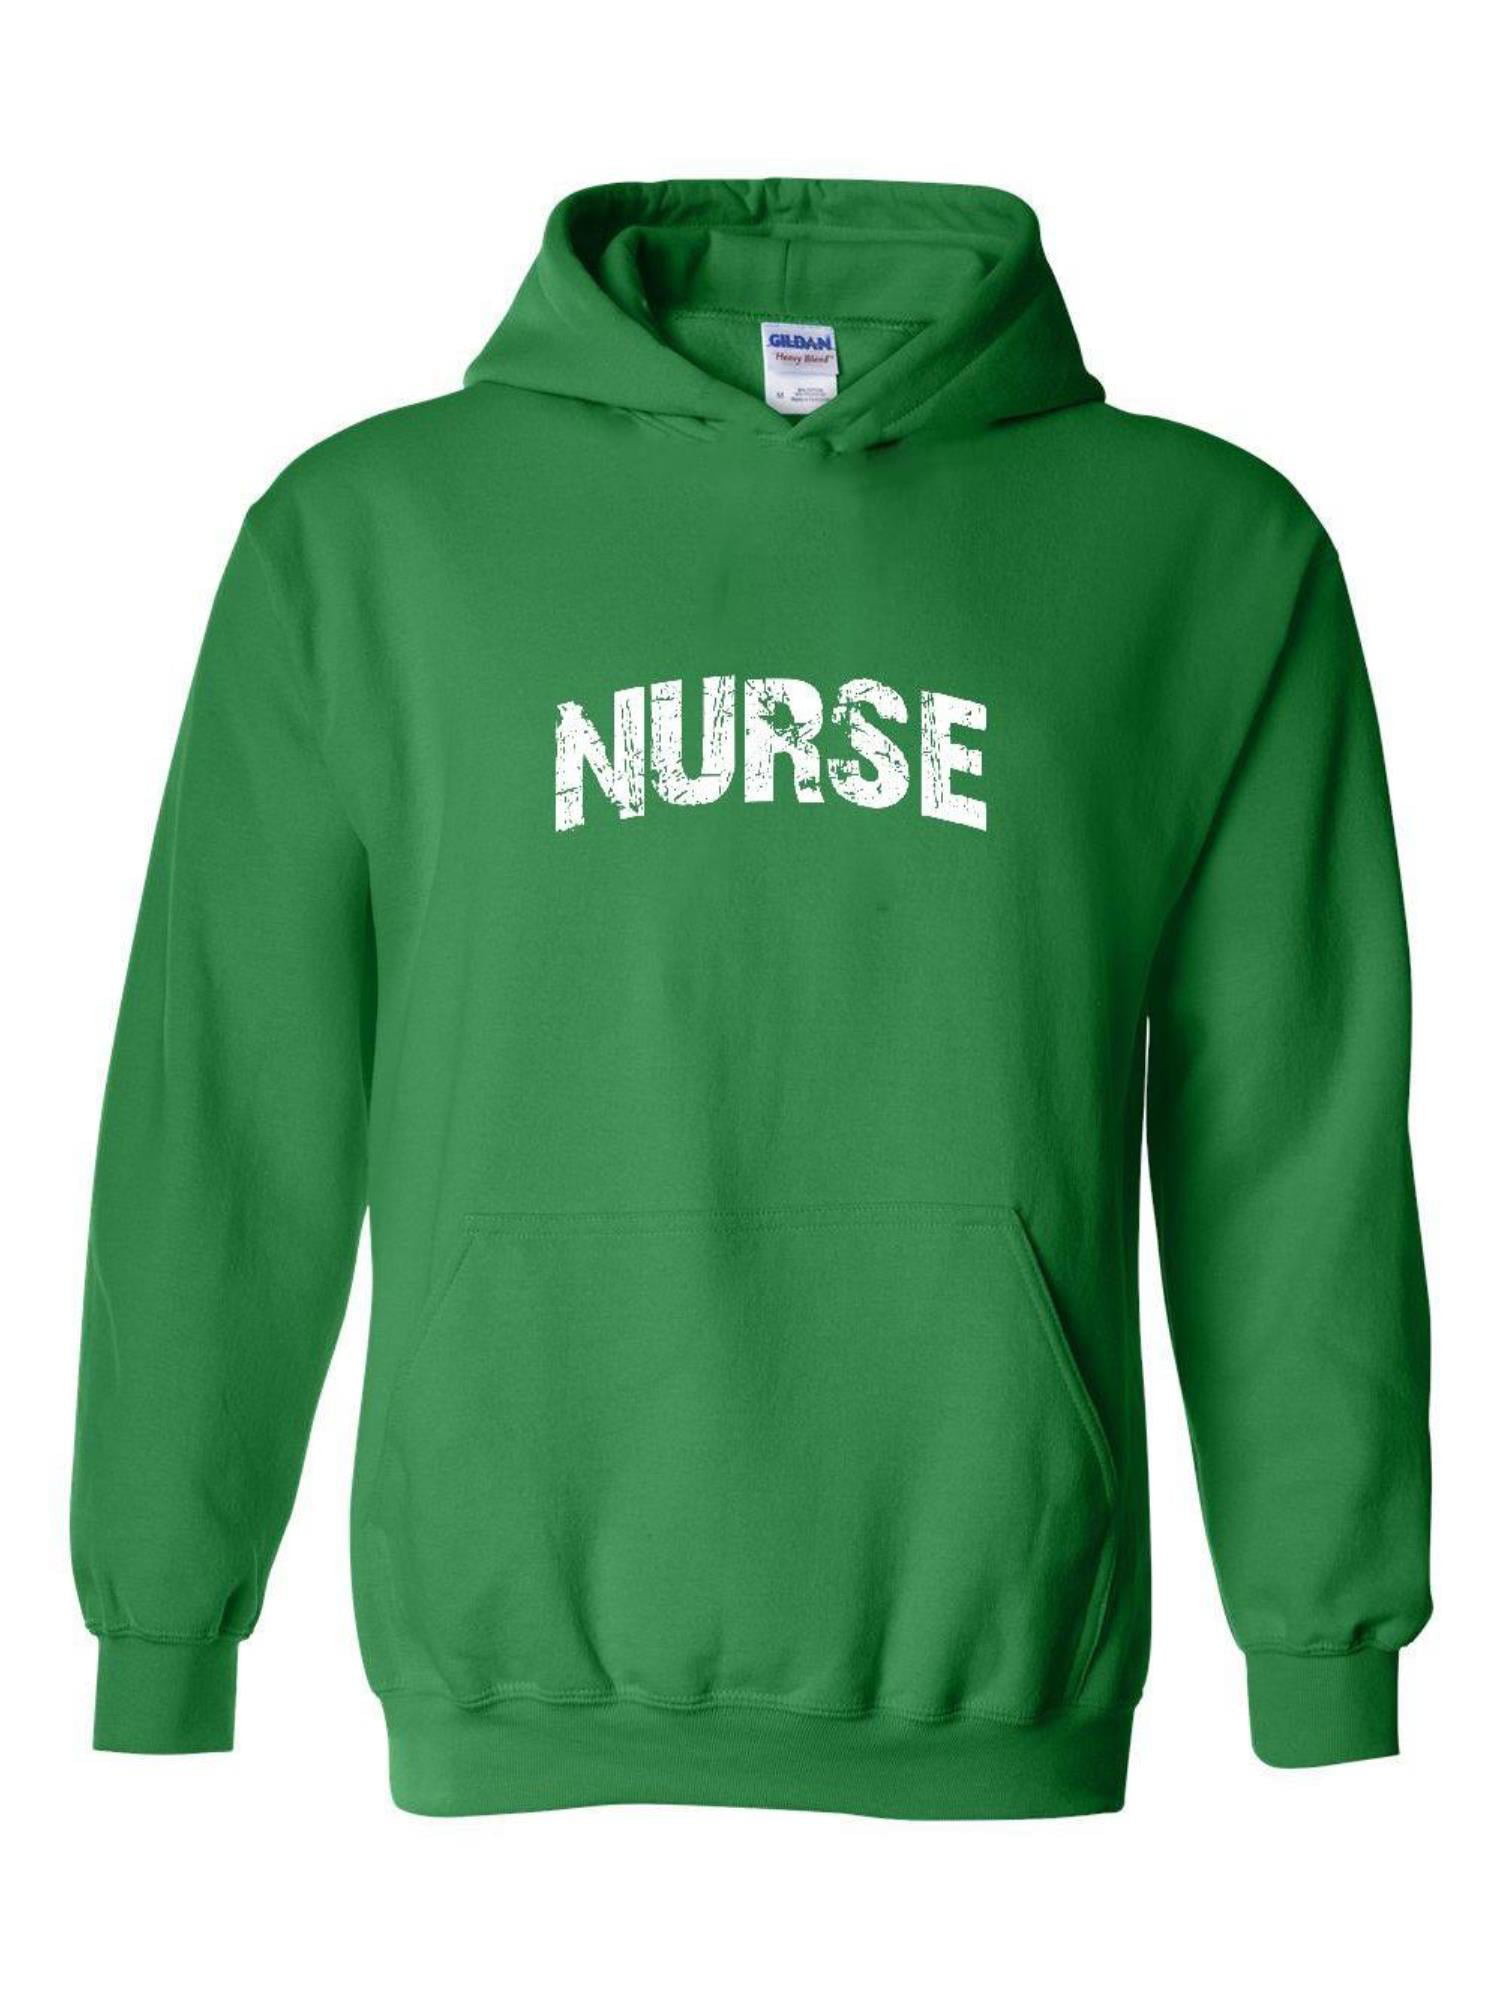 Unisex Nurse Hoodie Sweatshirt - Walmart.com - Walmart.com